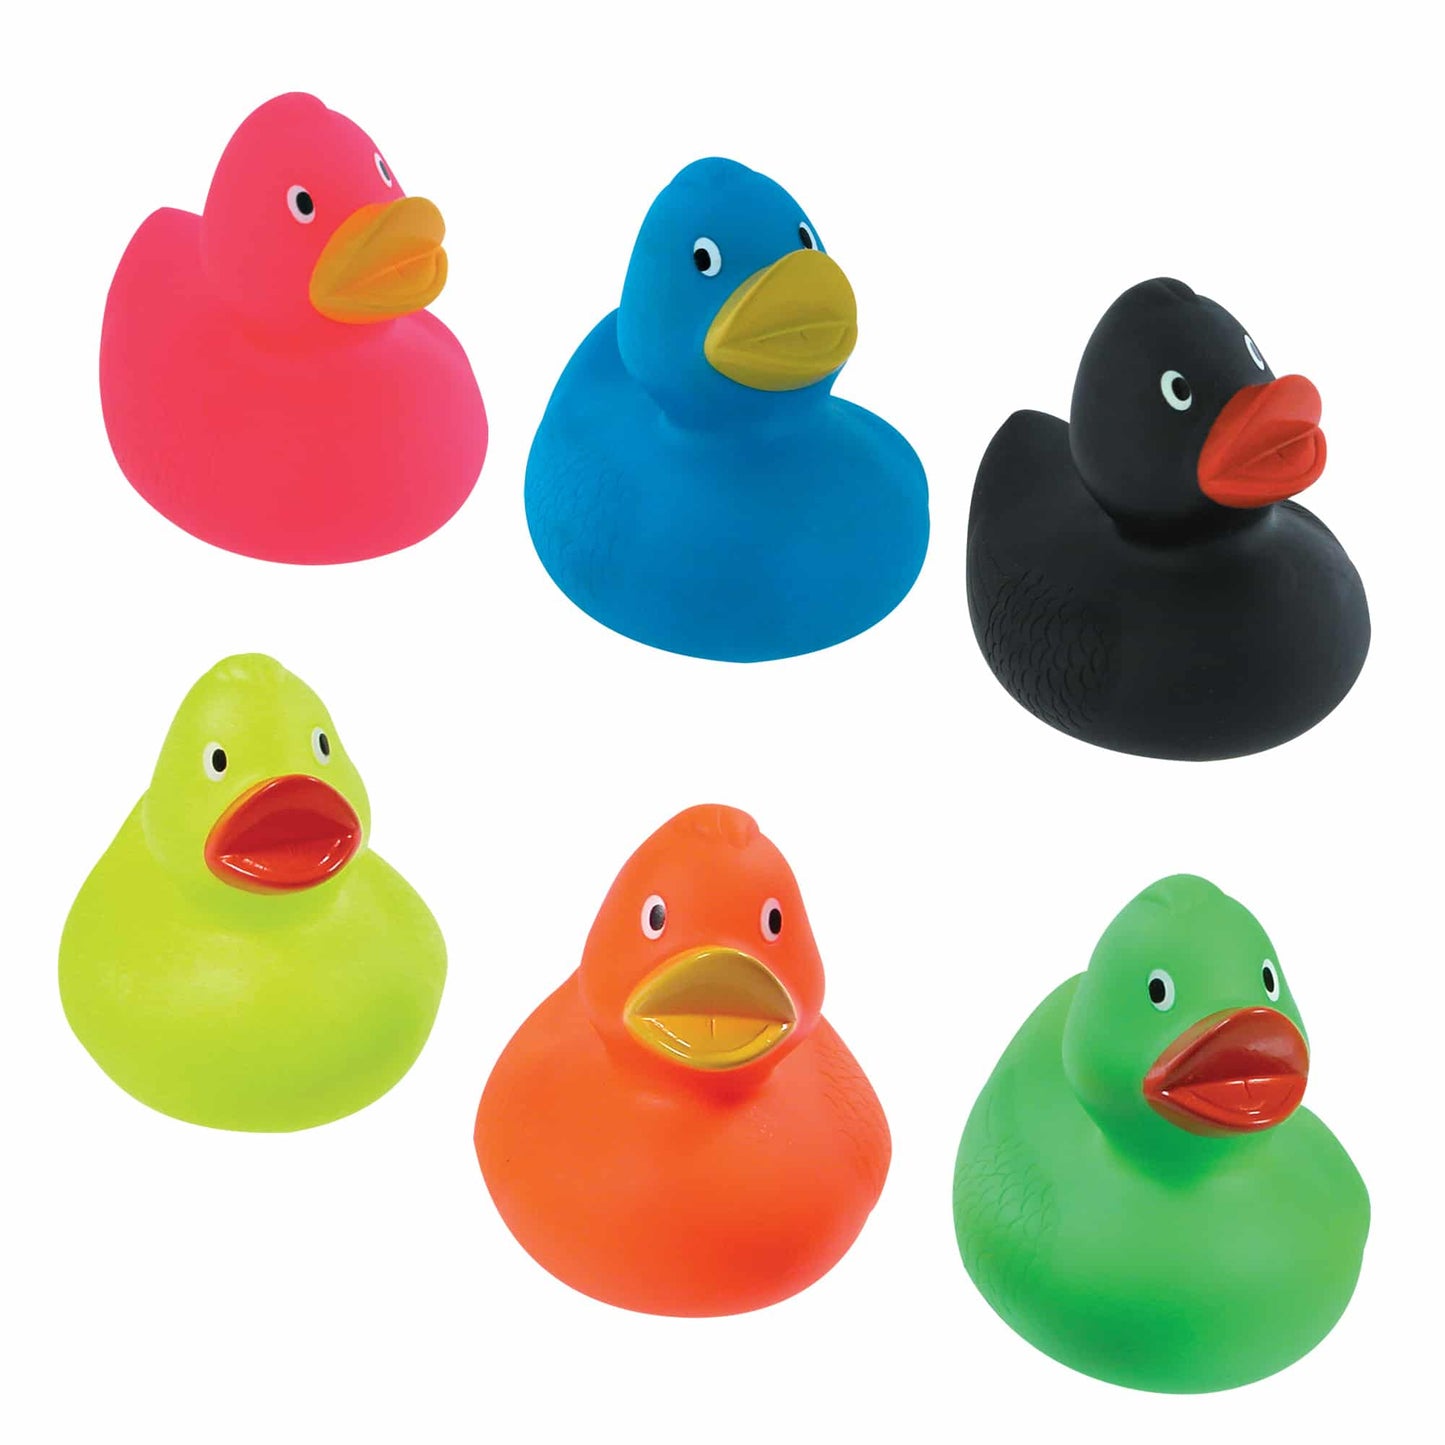 Rubber Duckies Multi Colors